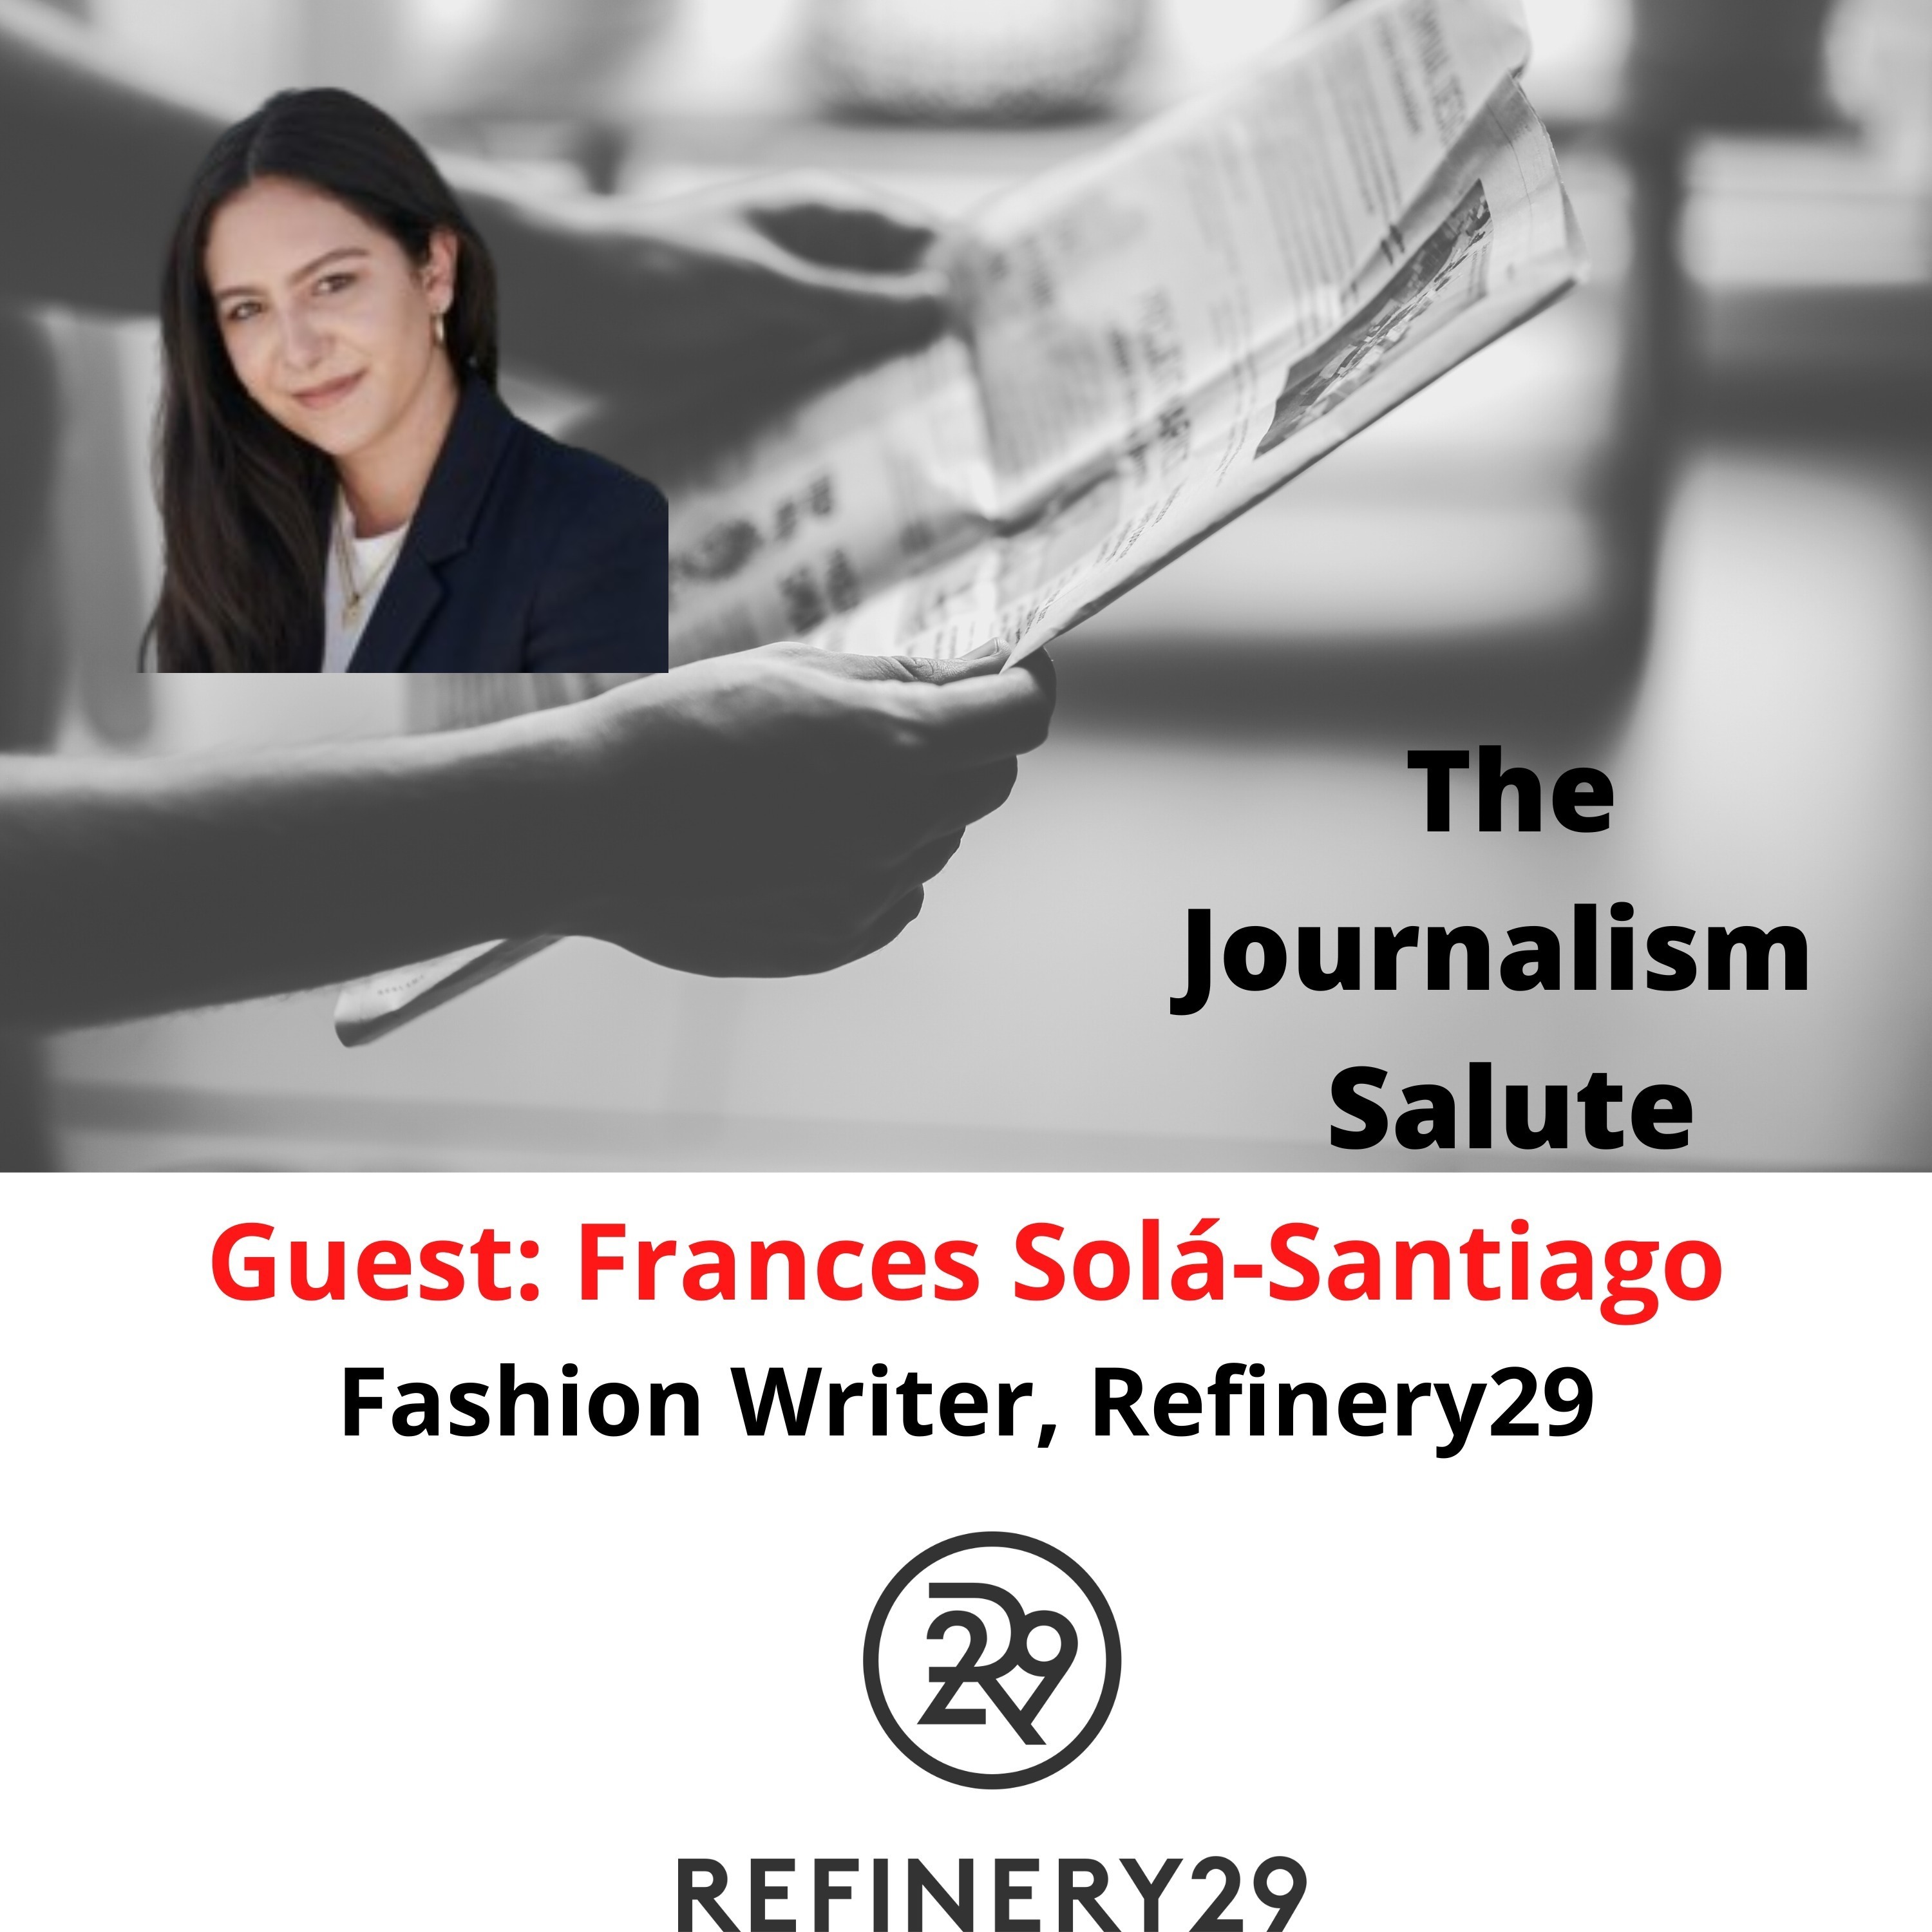 Frances Solá-Santiago, Fashion Writer: Refinery29